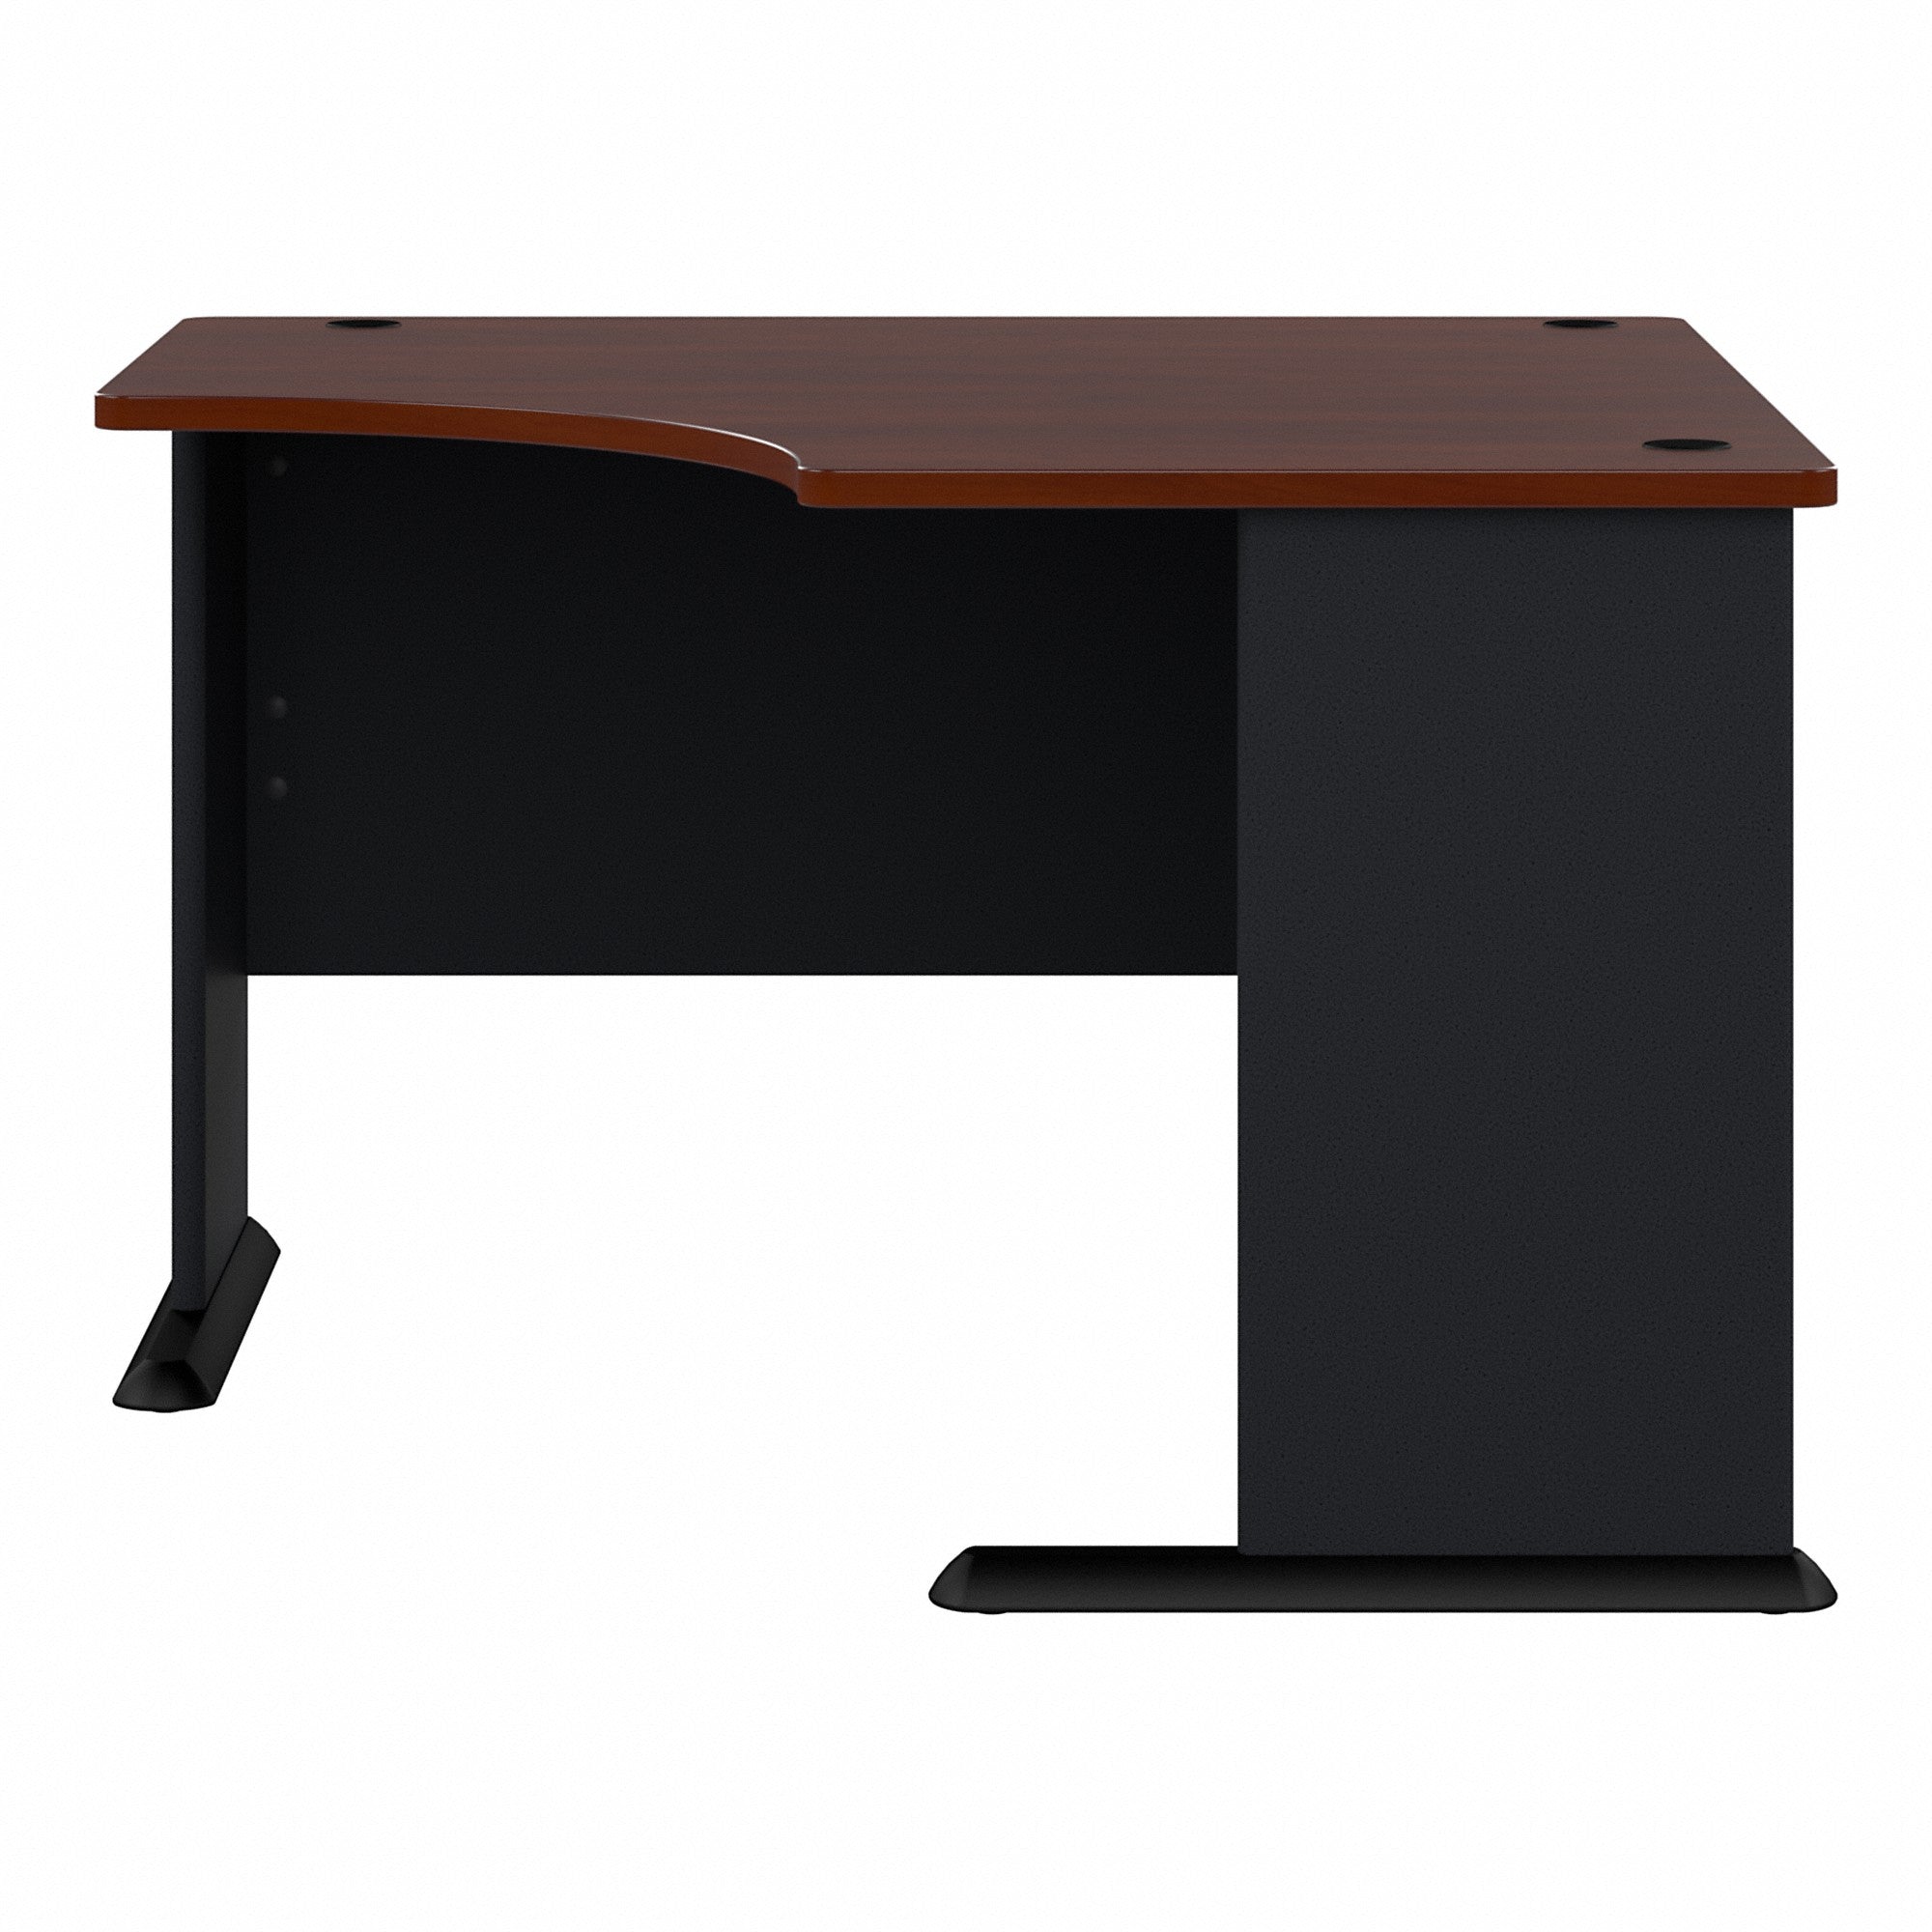 Bush Business Furniture Series A 48W Corner Desk